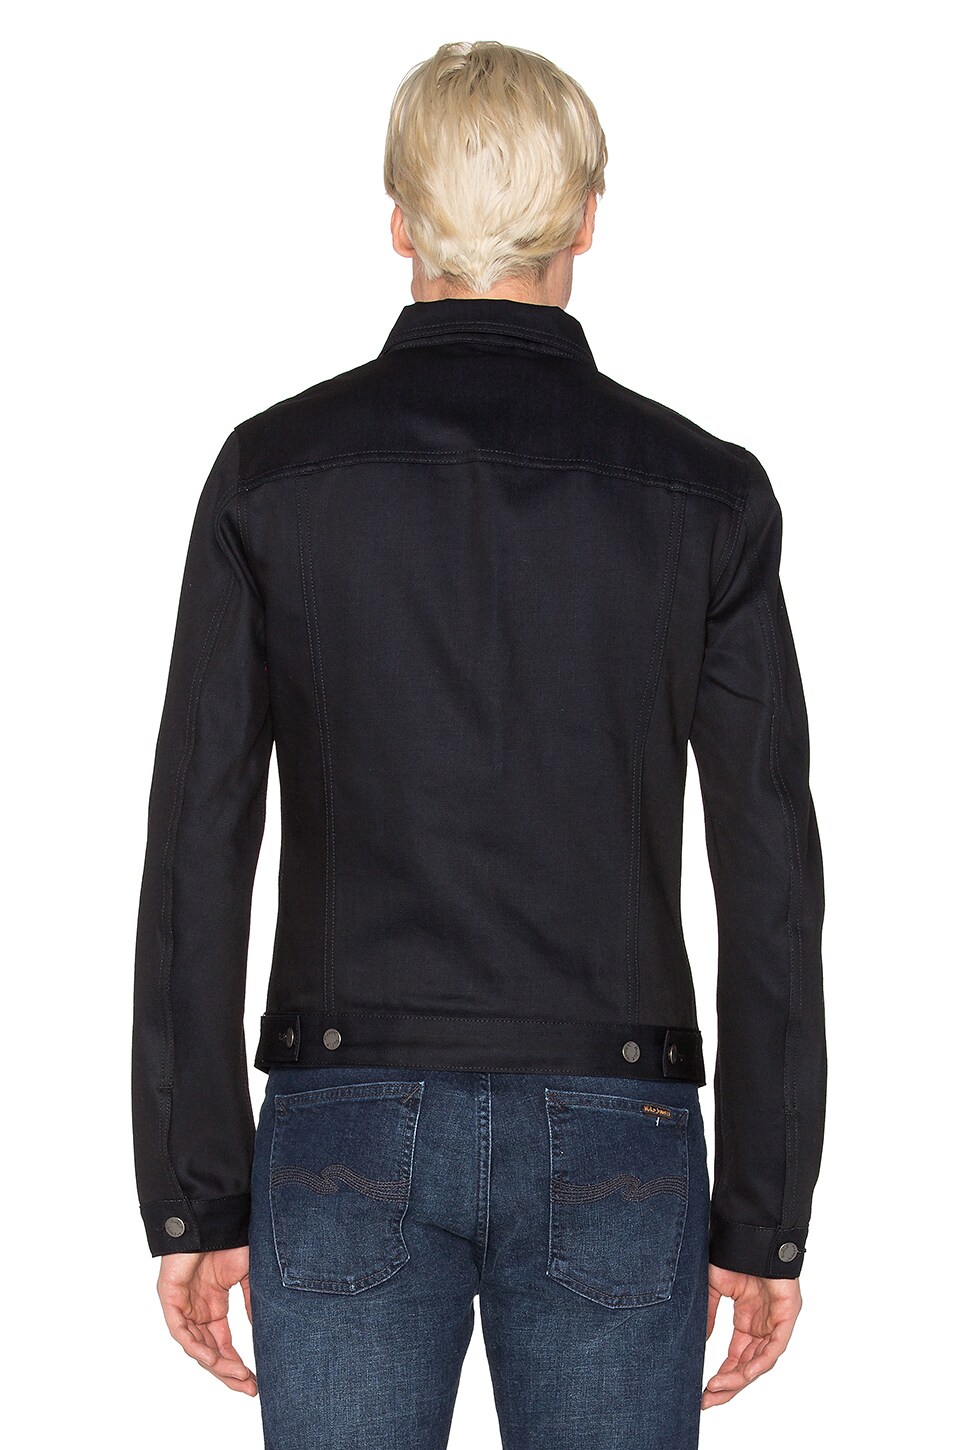 Nudie Jeans Billy Denim Jacket in Dry Black Dense | REVOLVE